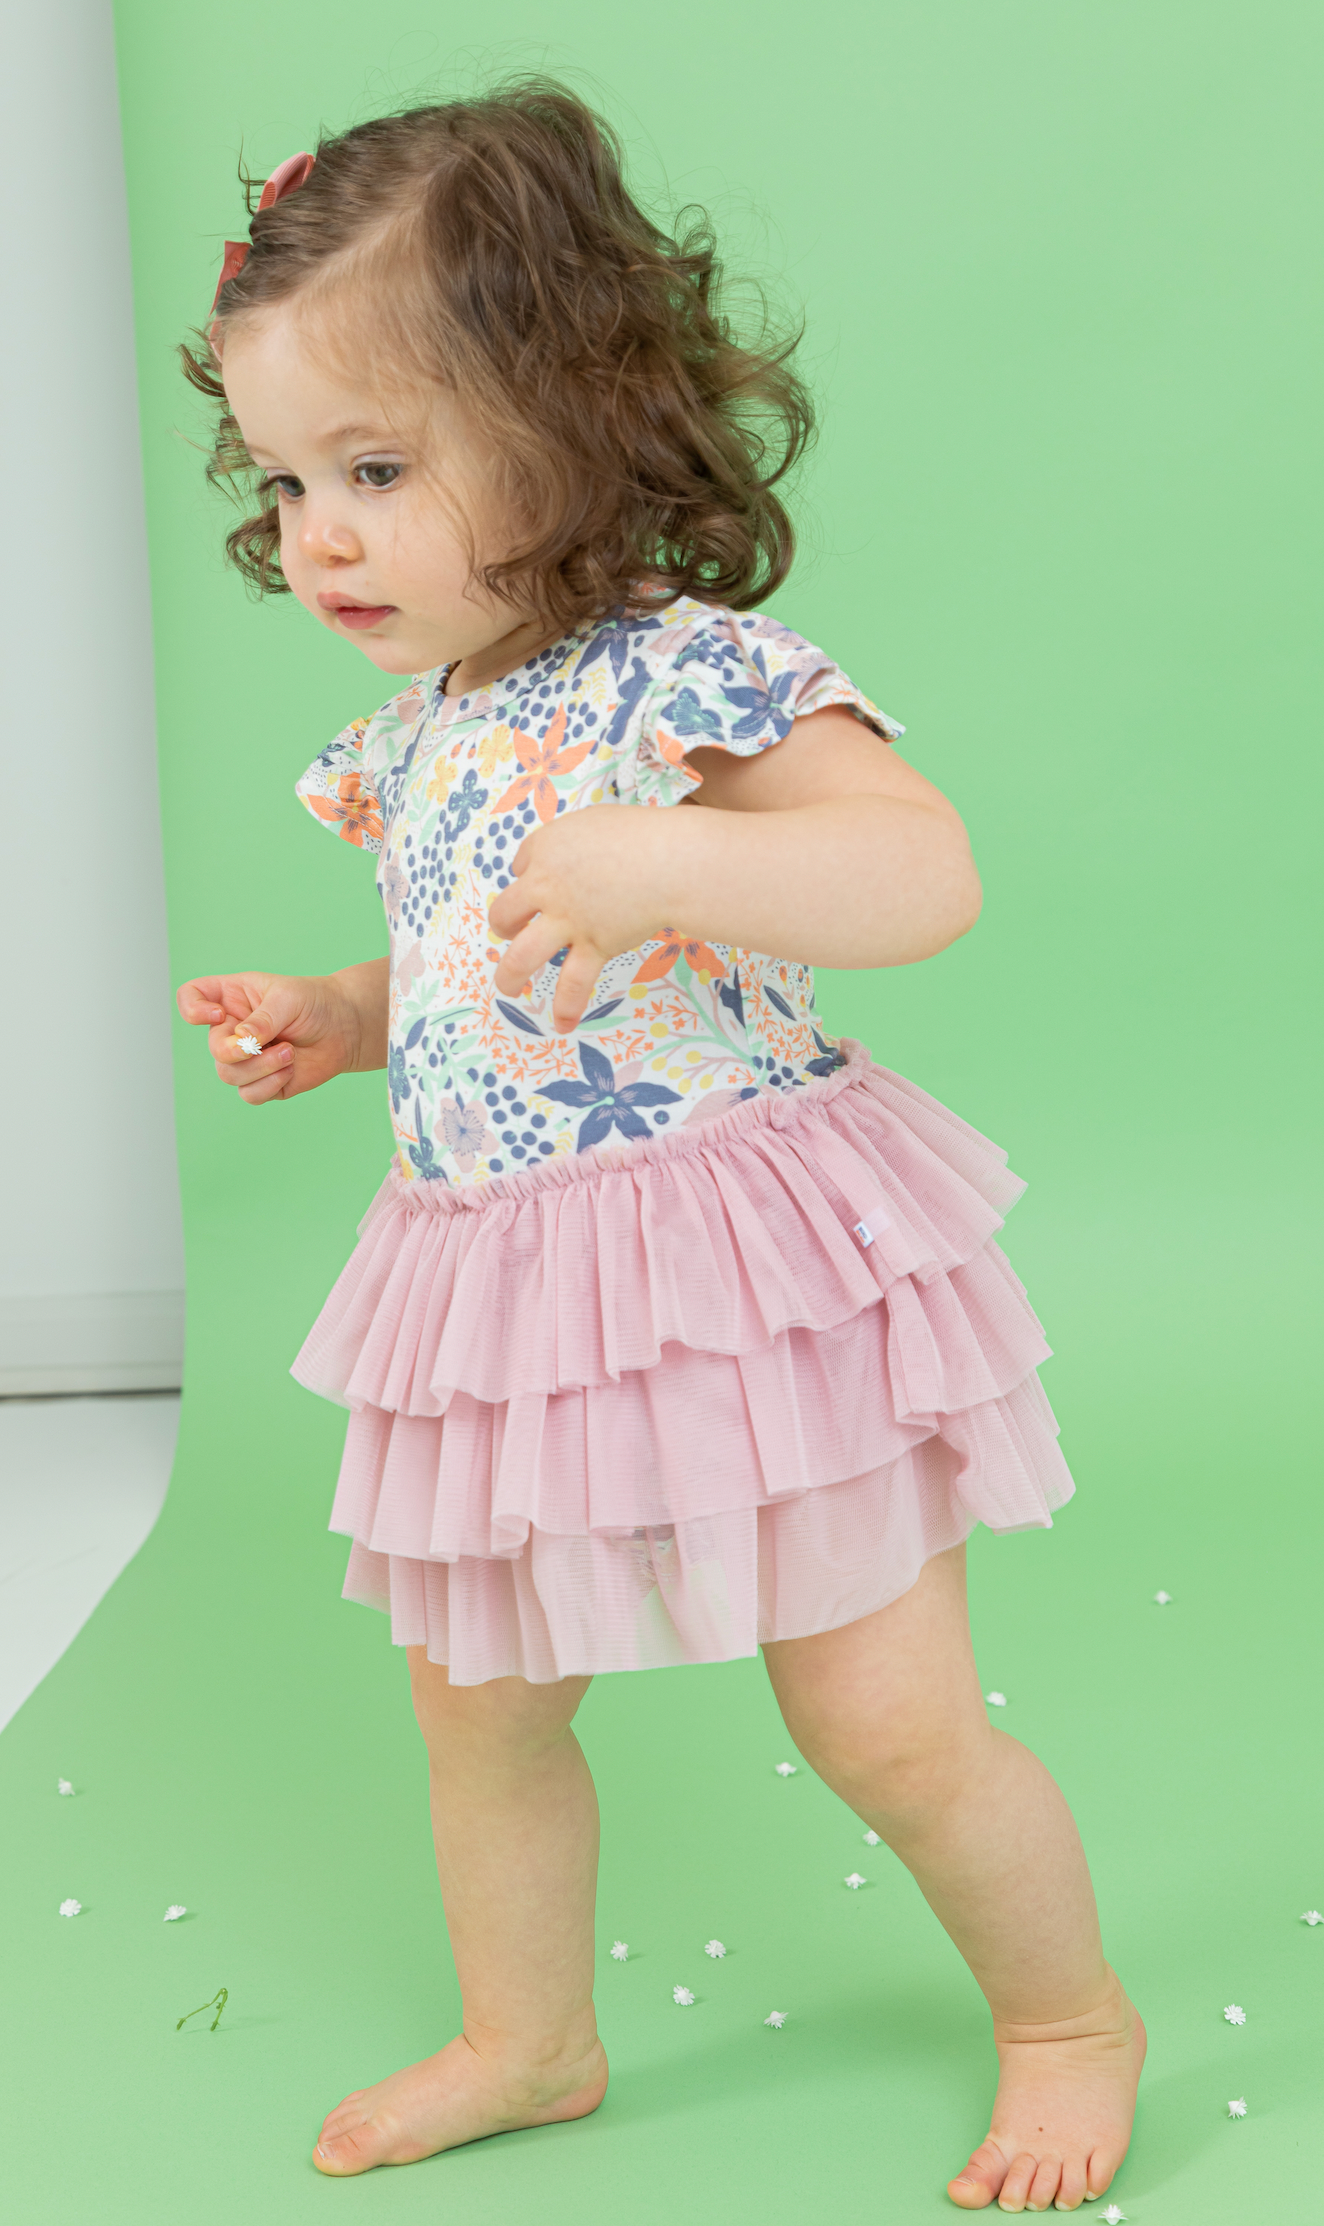 Bird & Bean® - Baby Tulle Skirted Bodysuit - Meadow - Baby Easter Dress